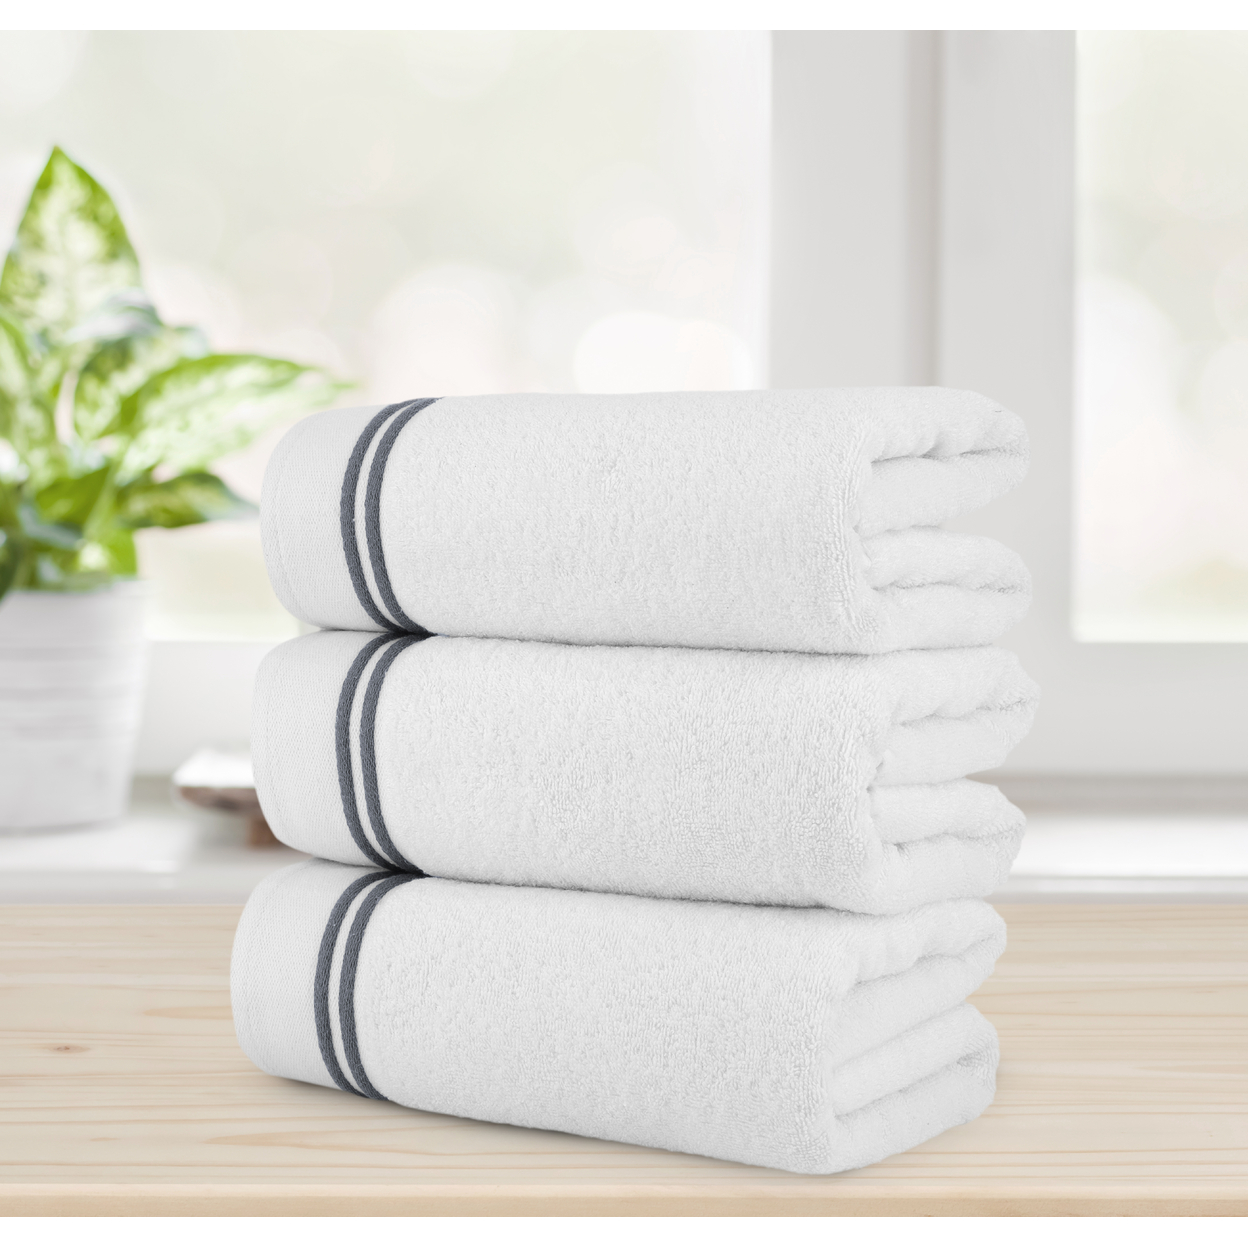 Chic Home Luxurious 3-Piece 100% Pure Turkish Cotton White Bath Towels, 30 X 60, Striped Hem, OEKO-TEX Certified Set - White-grey